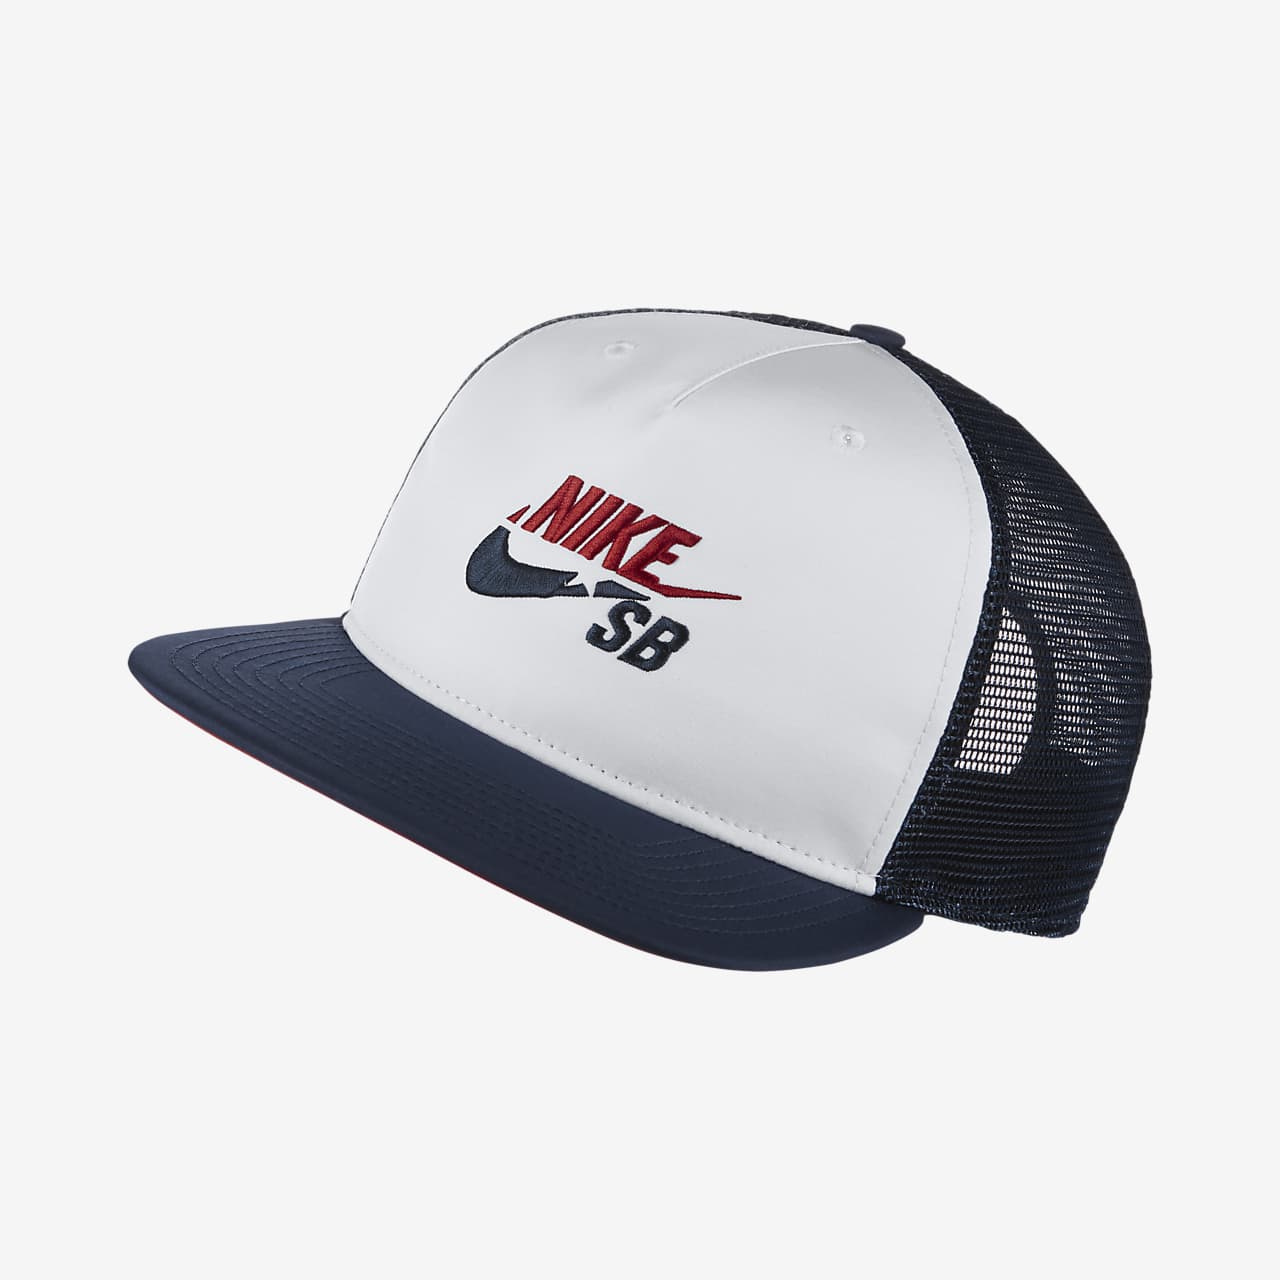 Por cierto Salida hacia salvar Nike SB Trucker Adjustable Hat. Nike SG